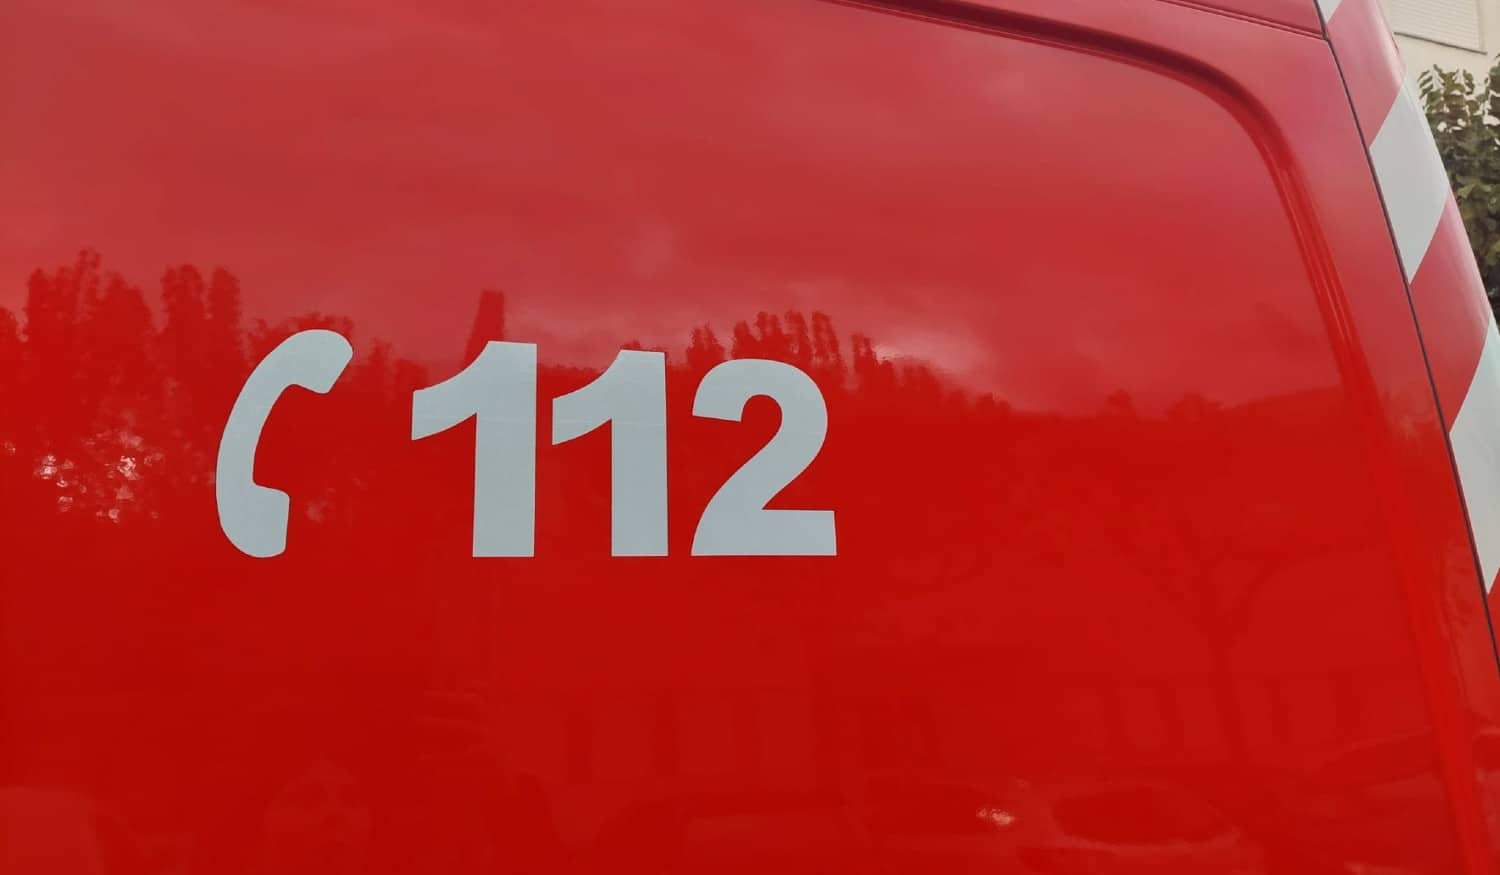 bombeiros ambulancia 112